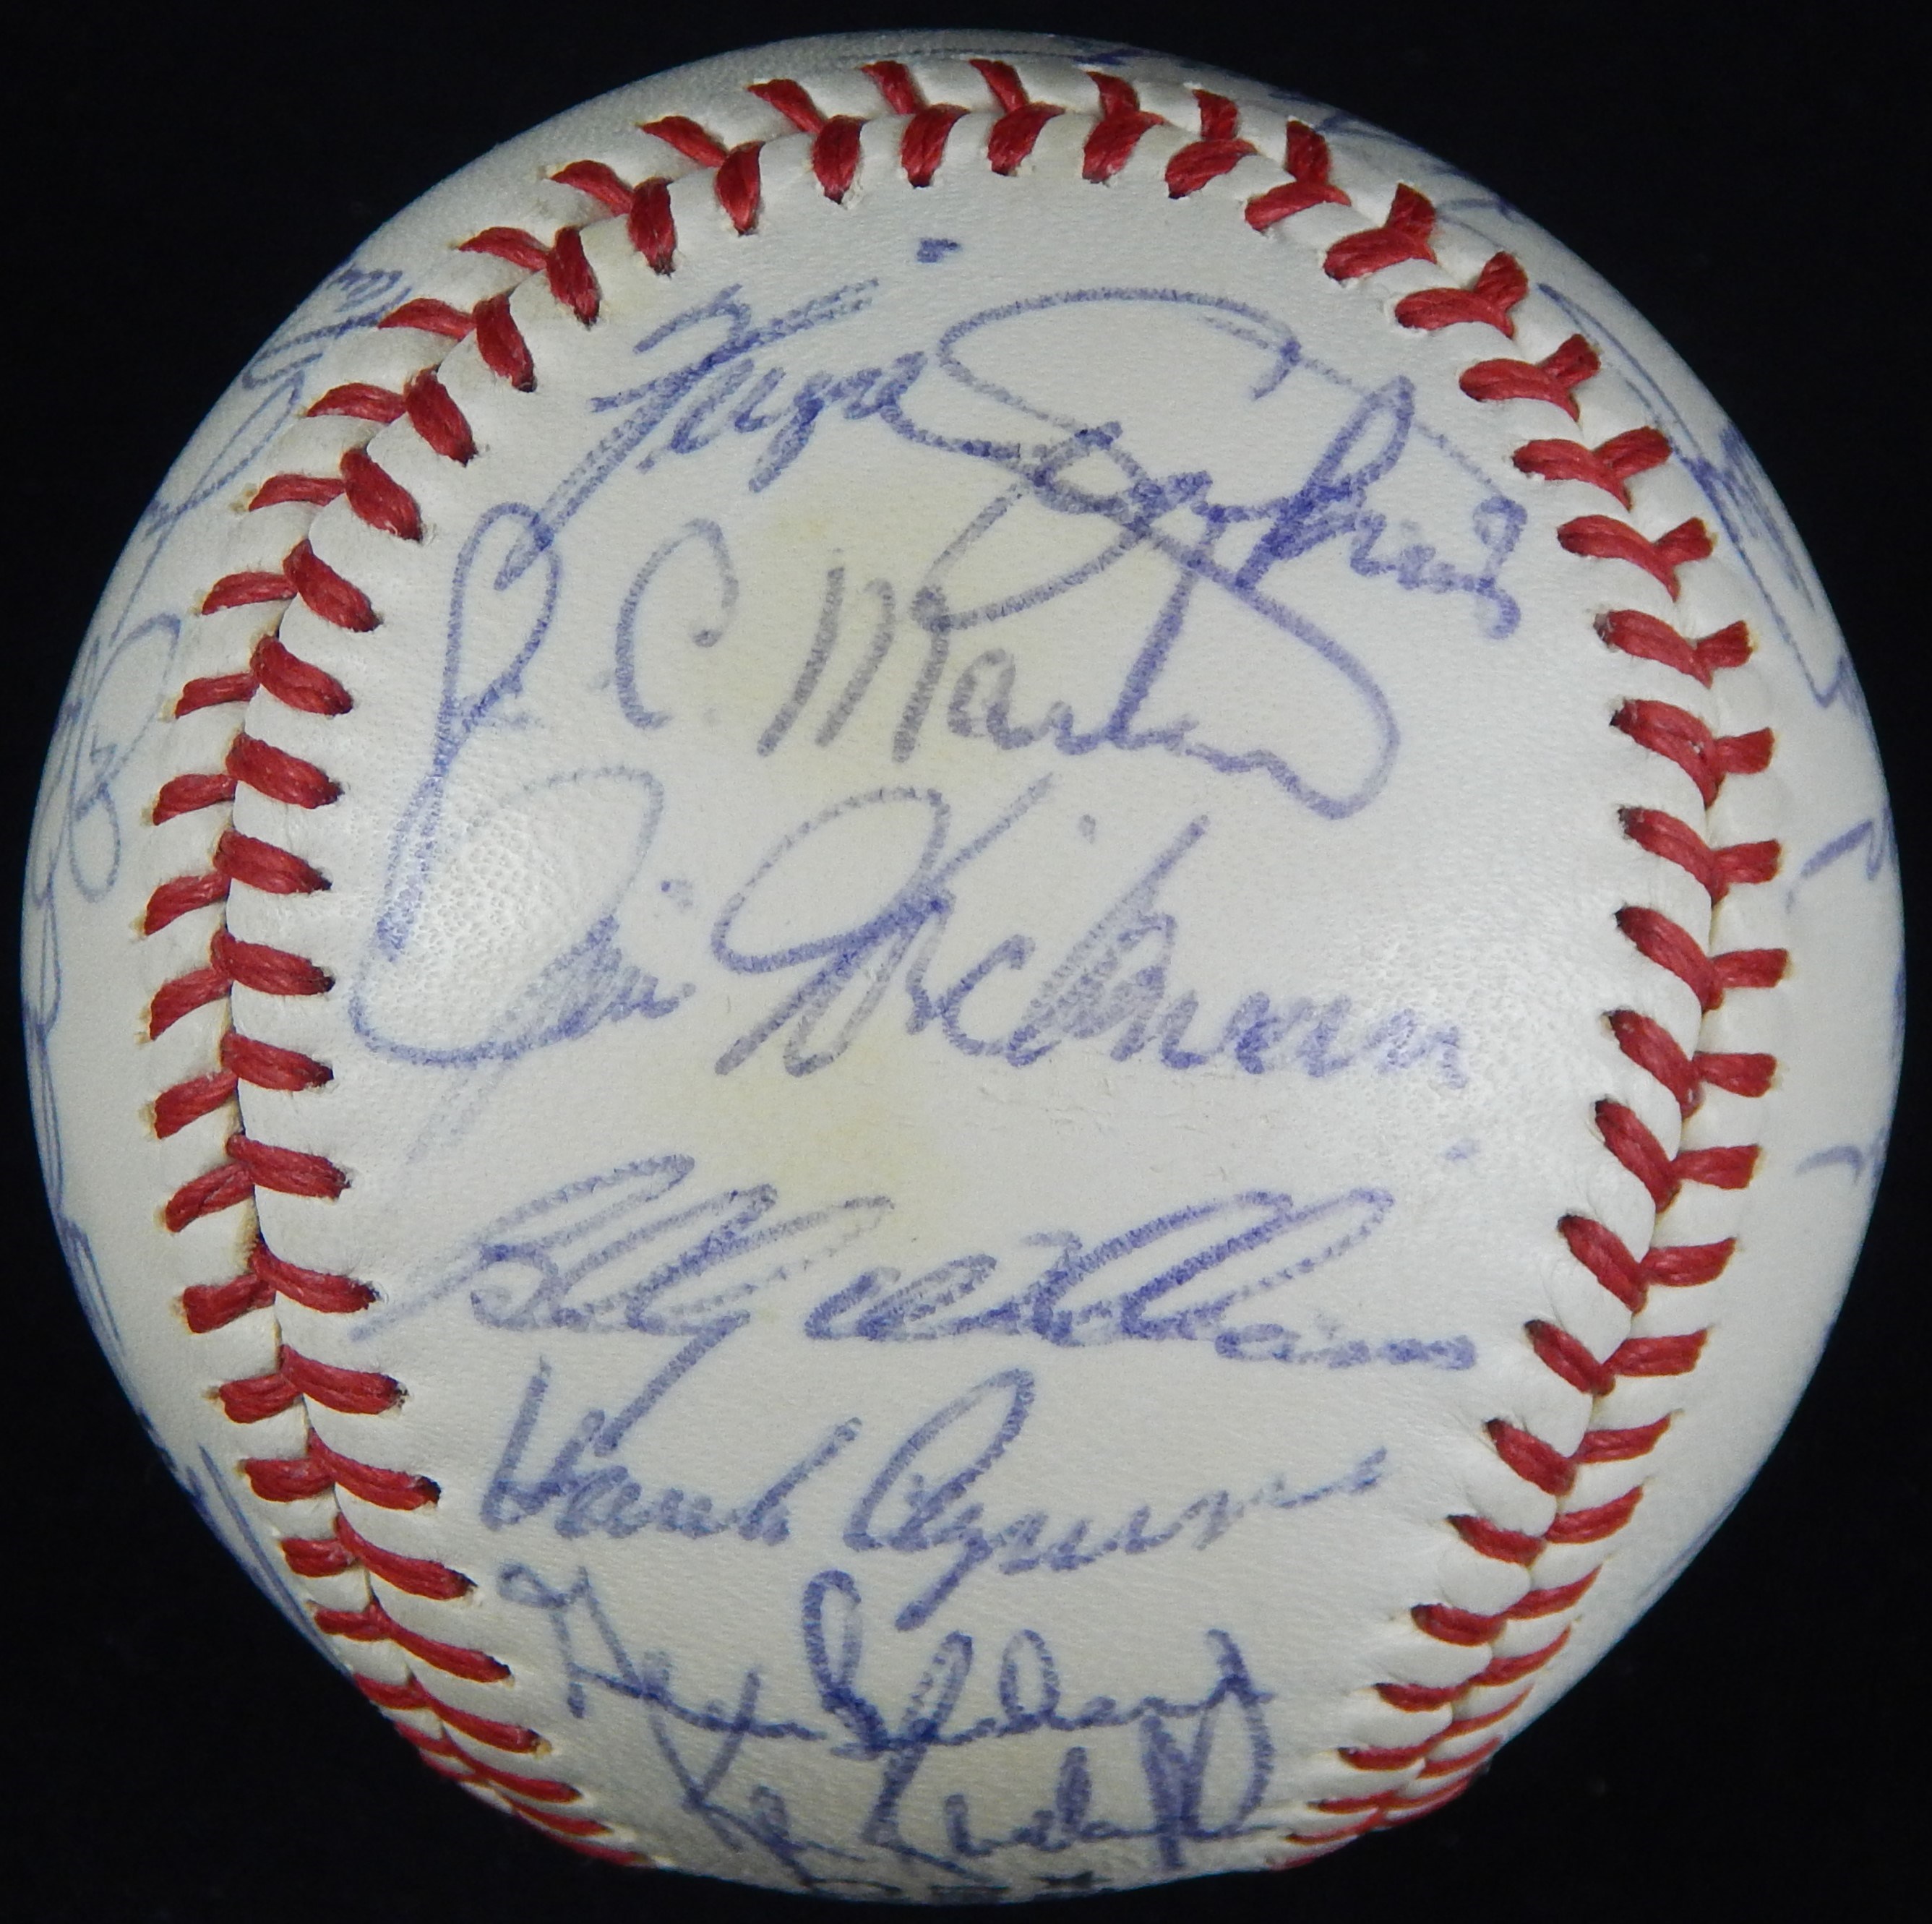 Team Baseballs - 1973 Chicago Cubs Team Signed Baseball with 30 Signatures - JSA LOA